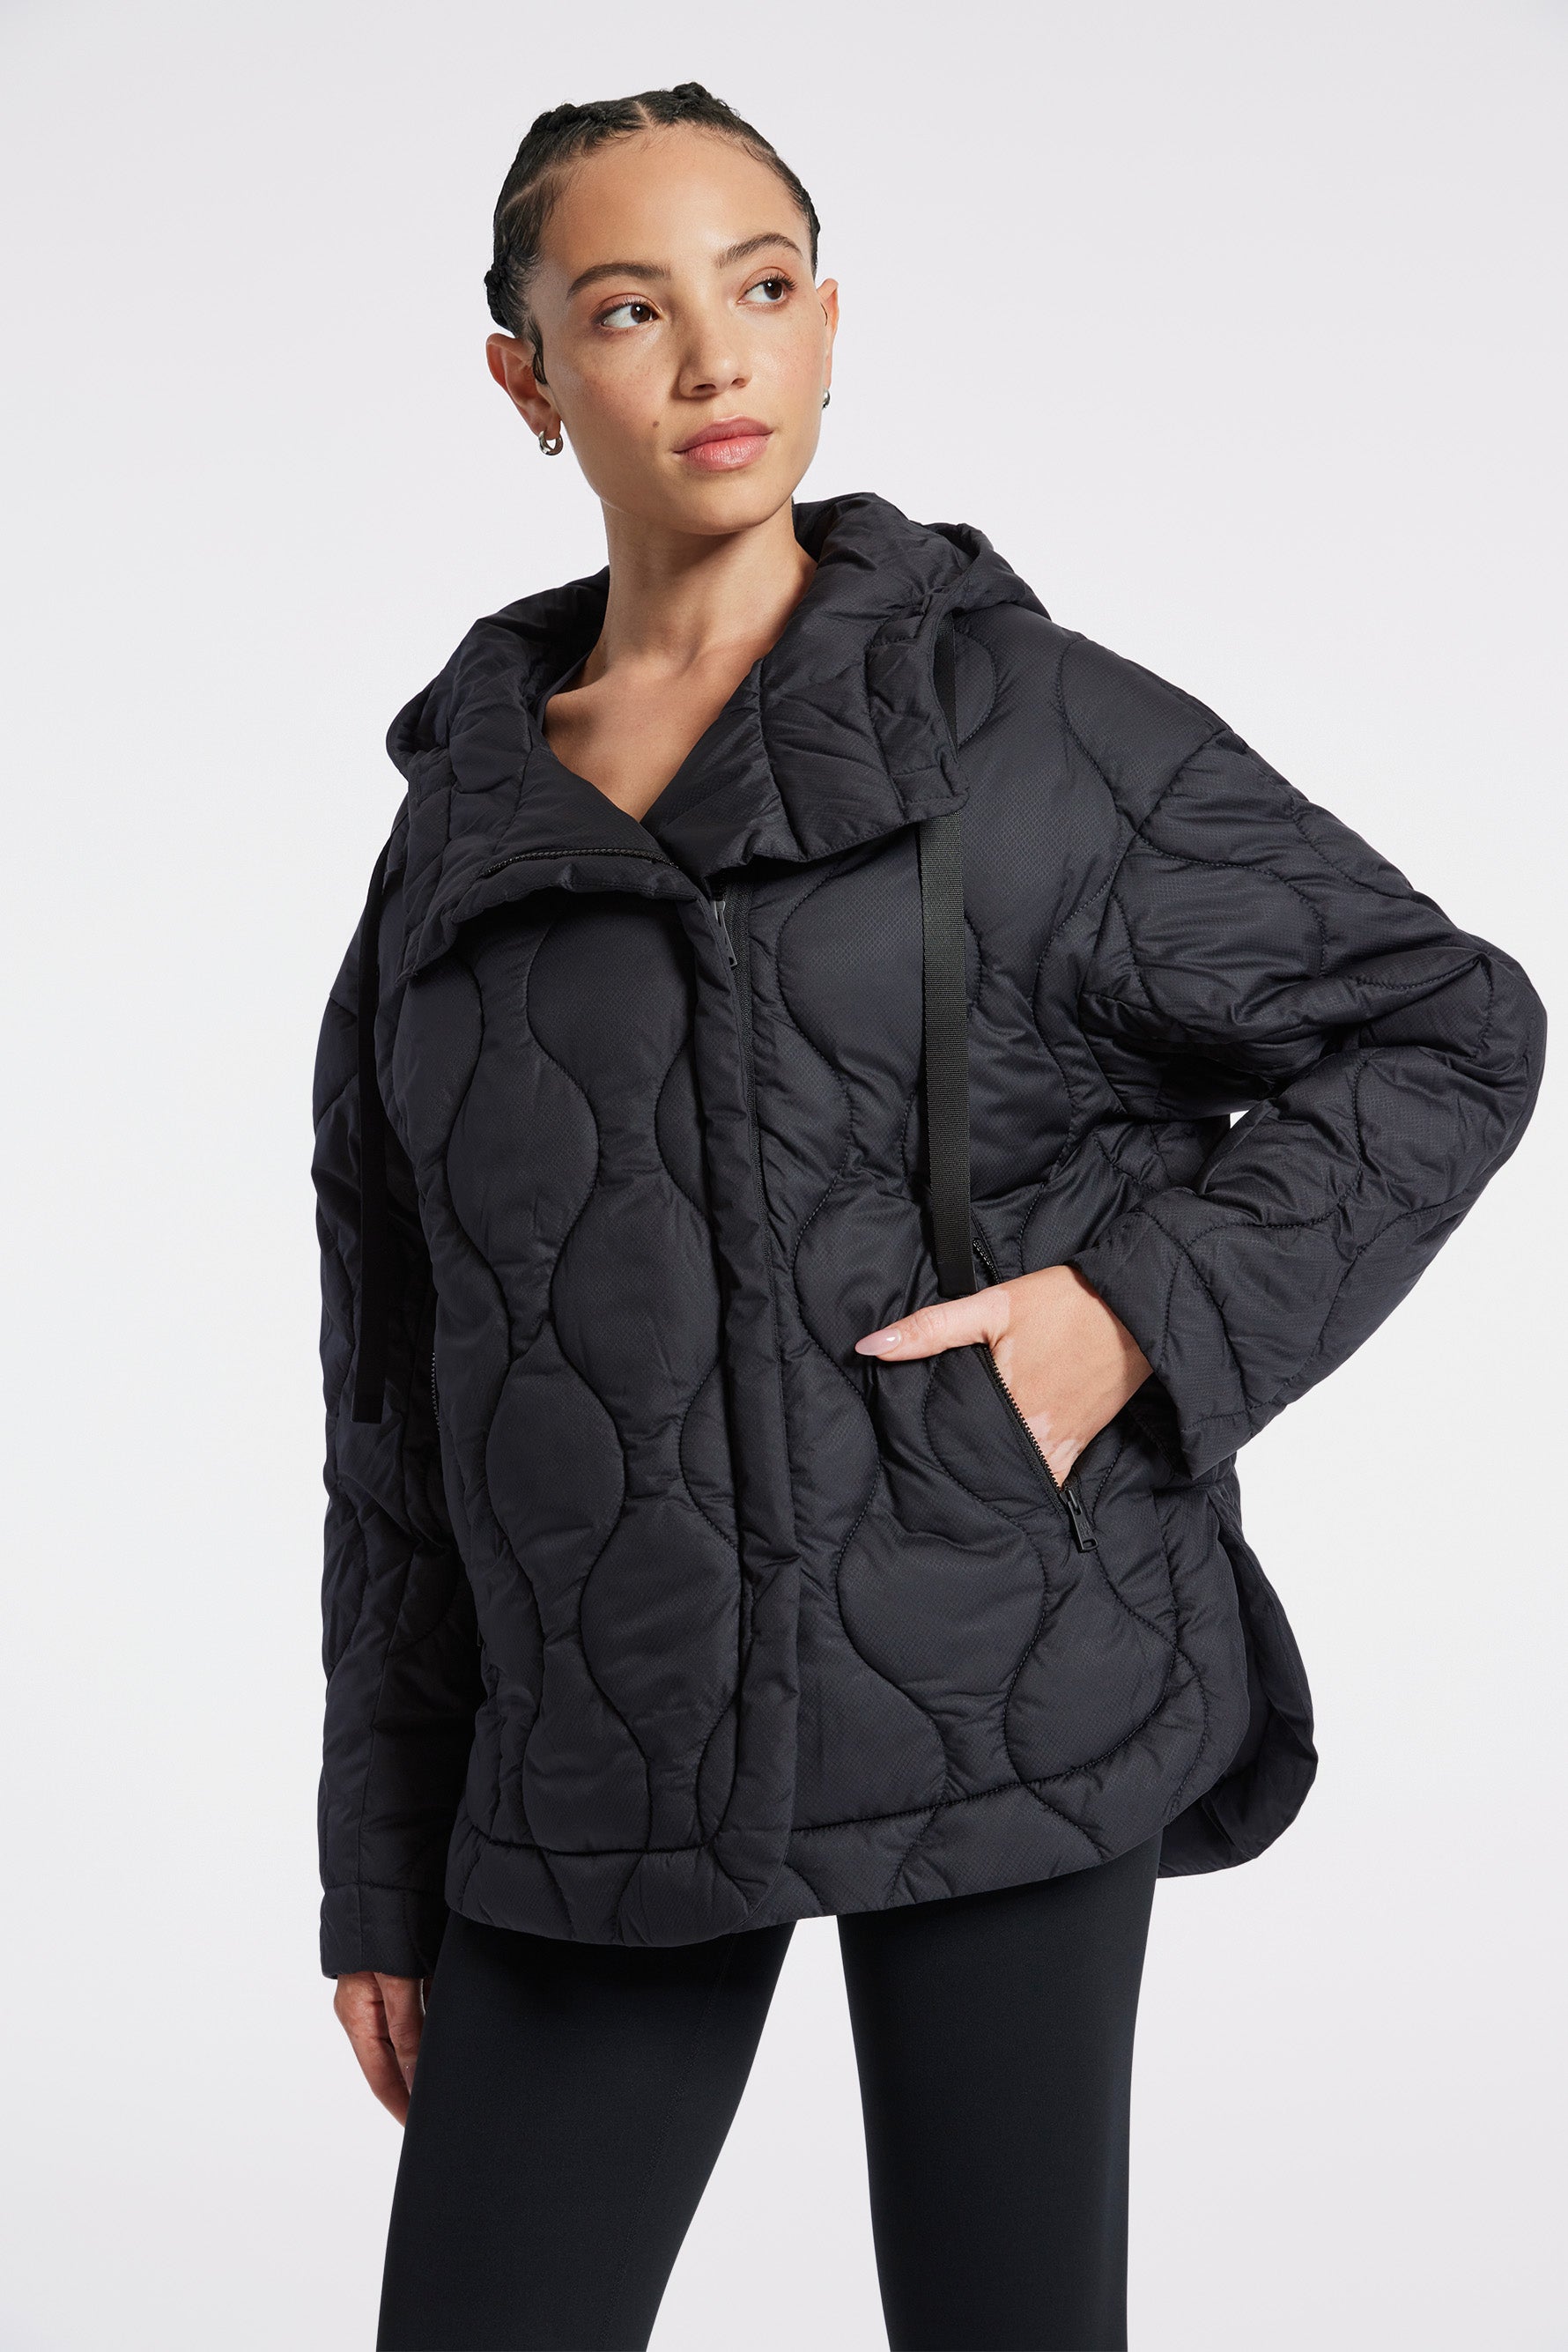 Alp N Rock Nori Quilted Jacket - Black - Women's Size S